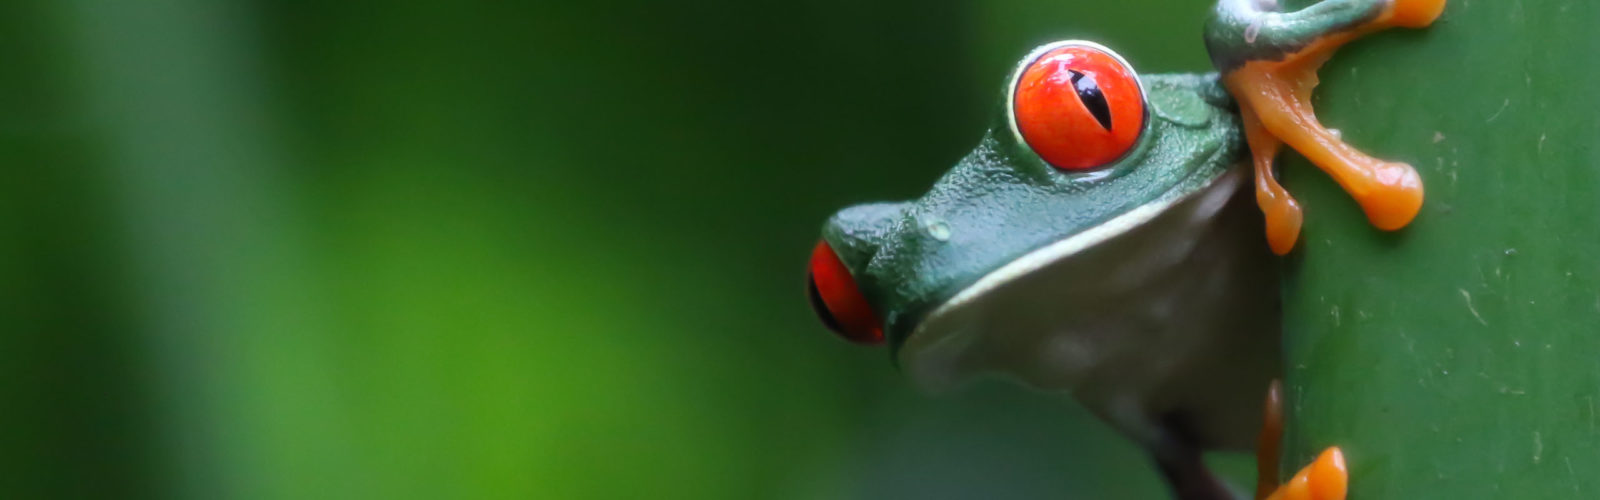 red-eyed-tree-frog-tortuguero-costa-rica